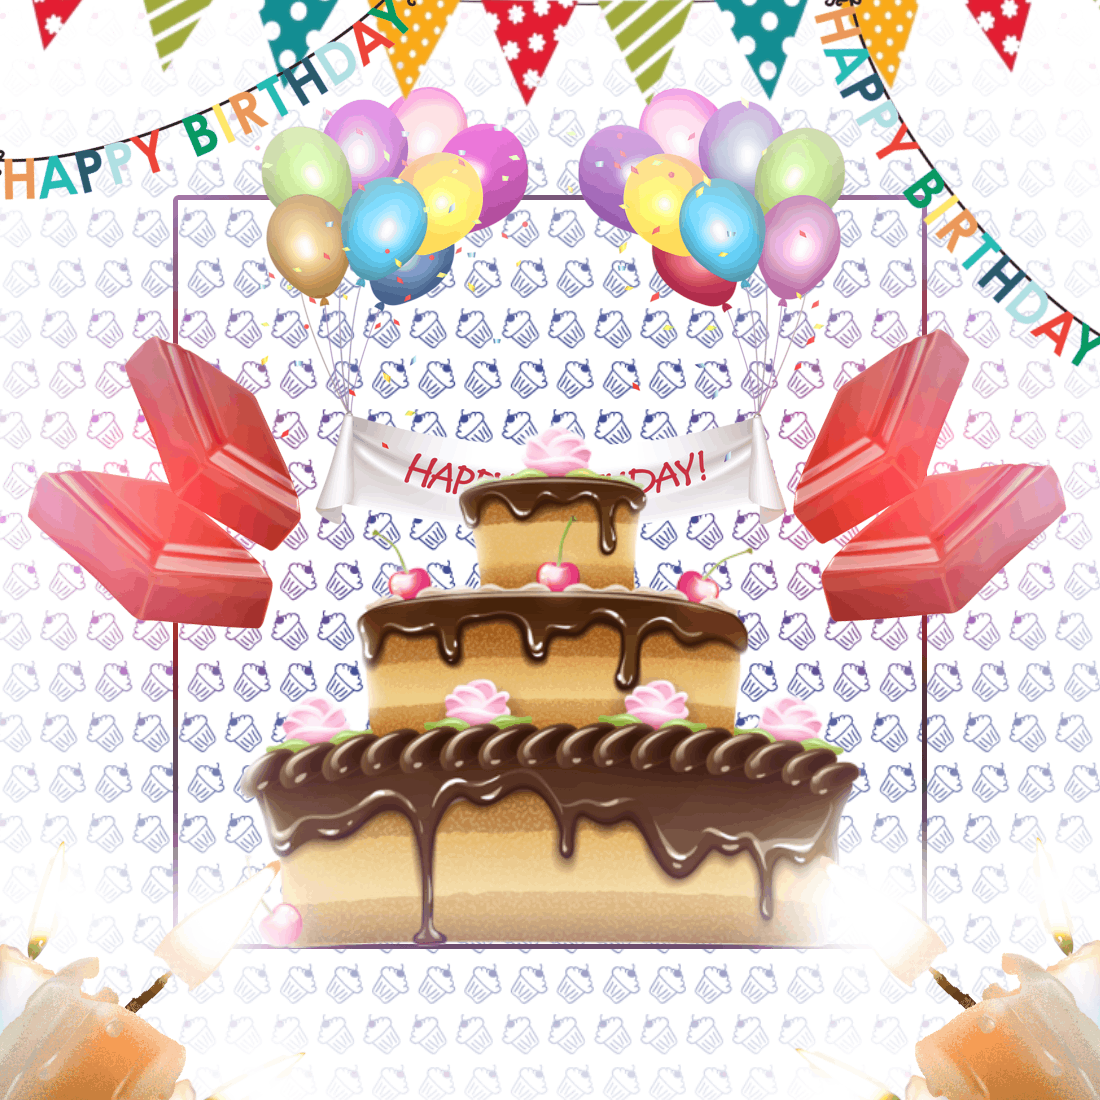 Birthday Card Design cover image.